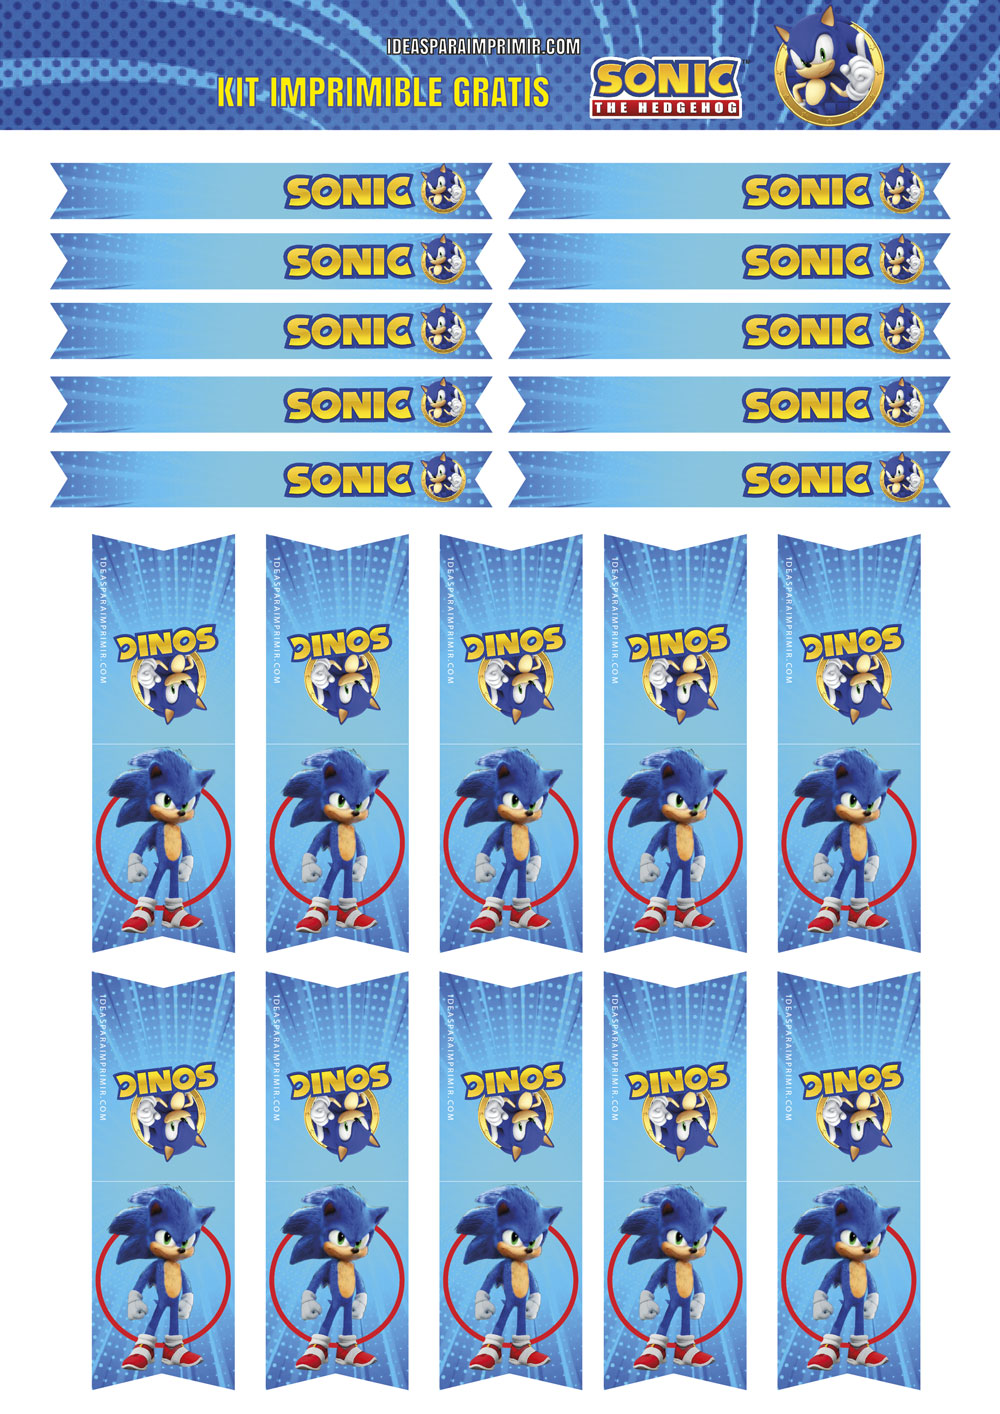 Etiqueta para cerrar souvenires de Sonic